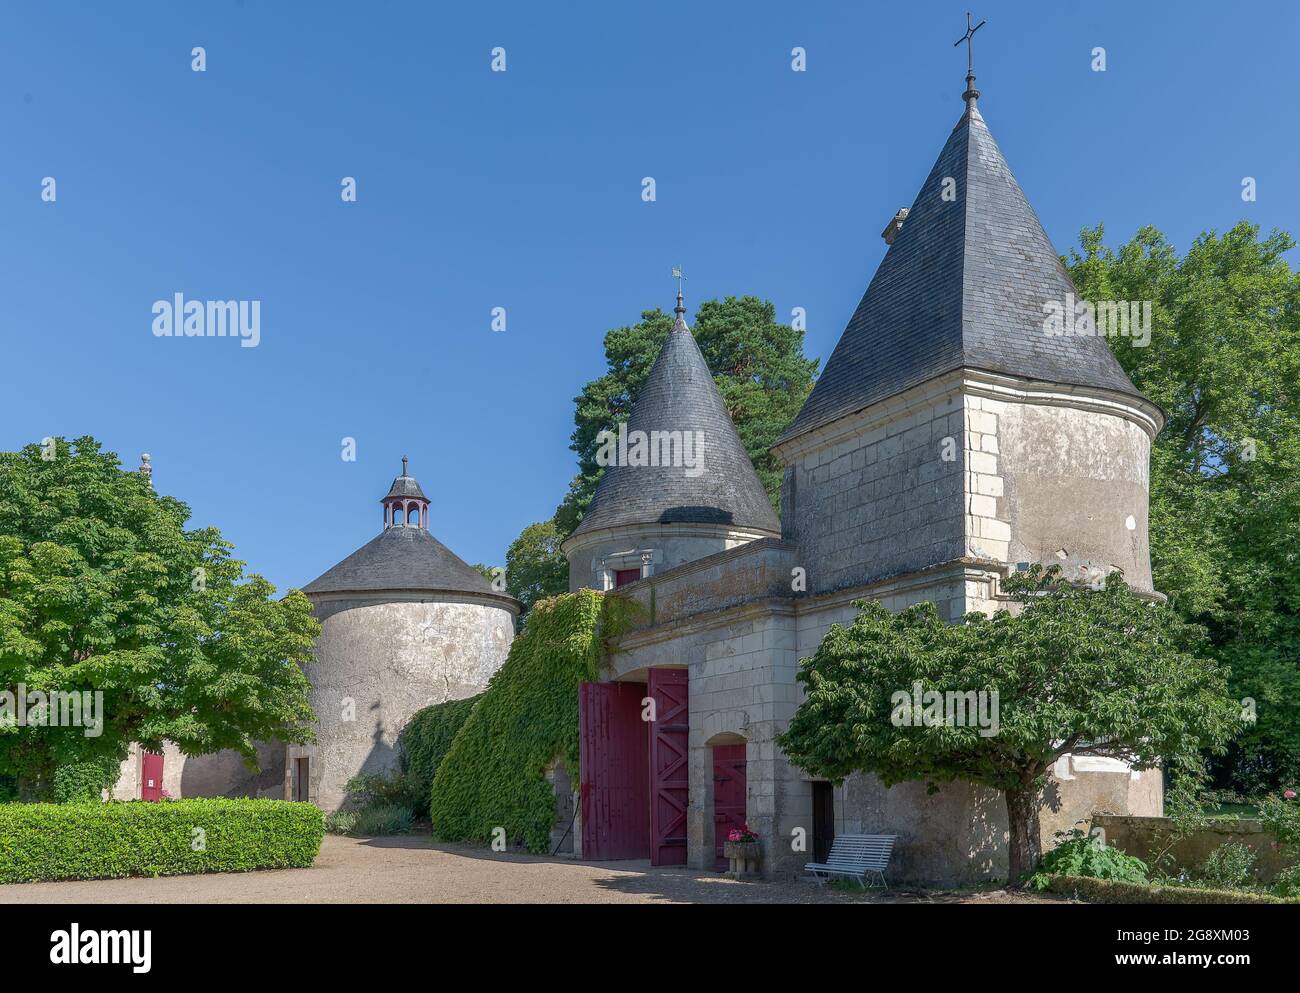 Château de Nitray, Nitray, Loire-Tal, Frankreich Stockfoto